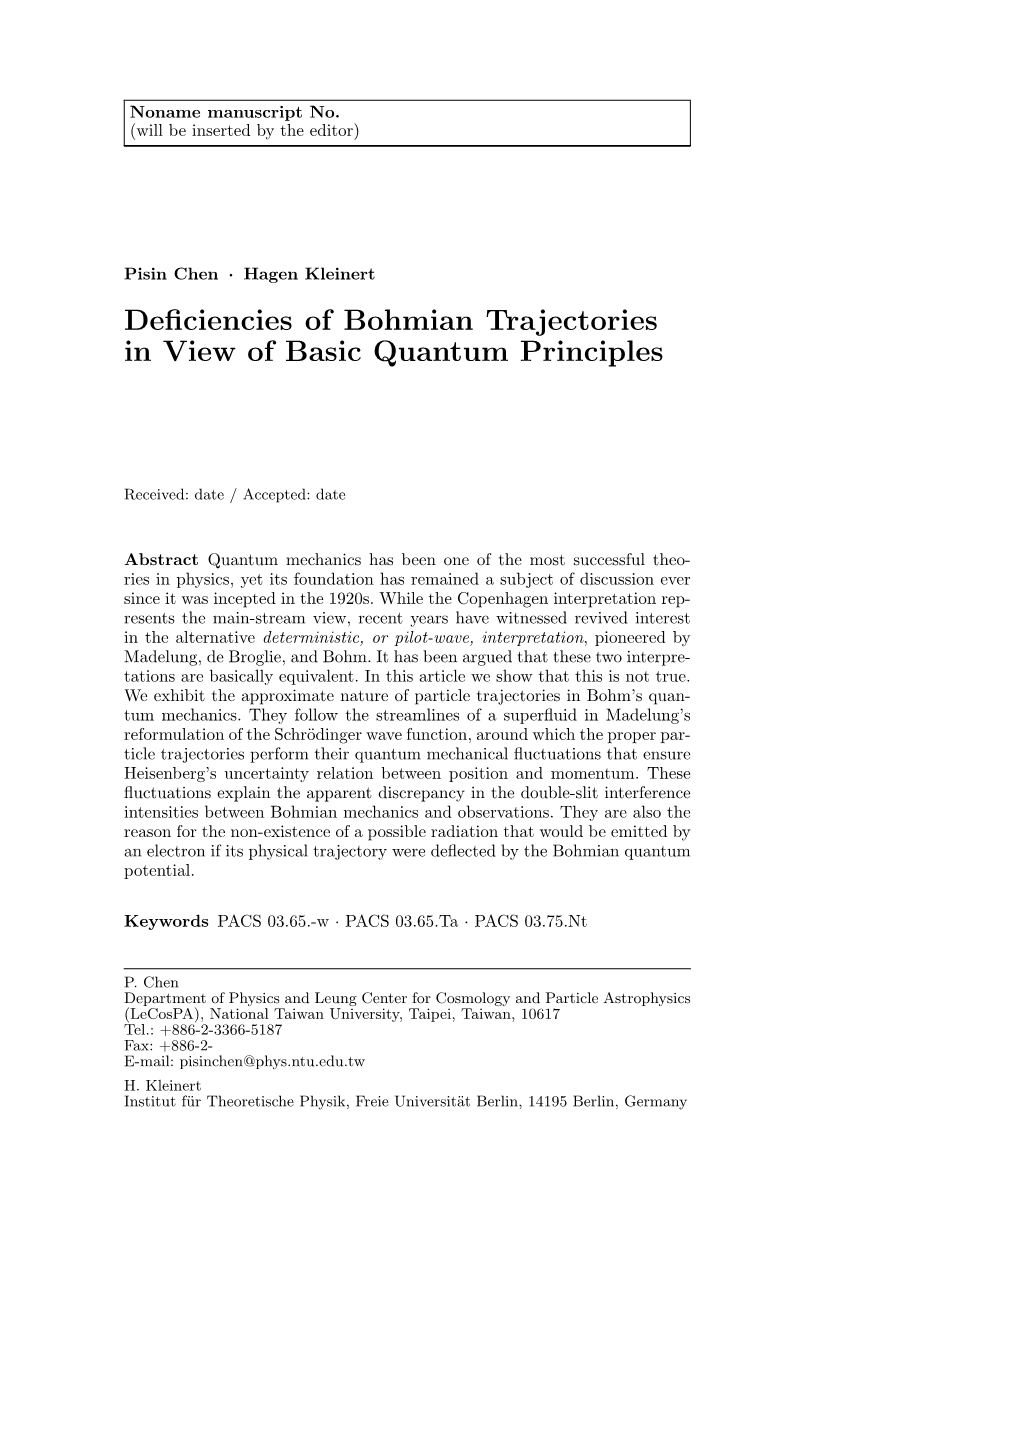 Deficiencies of Bohmian Trajectories in View of Basic Quantum Principles